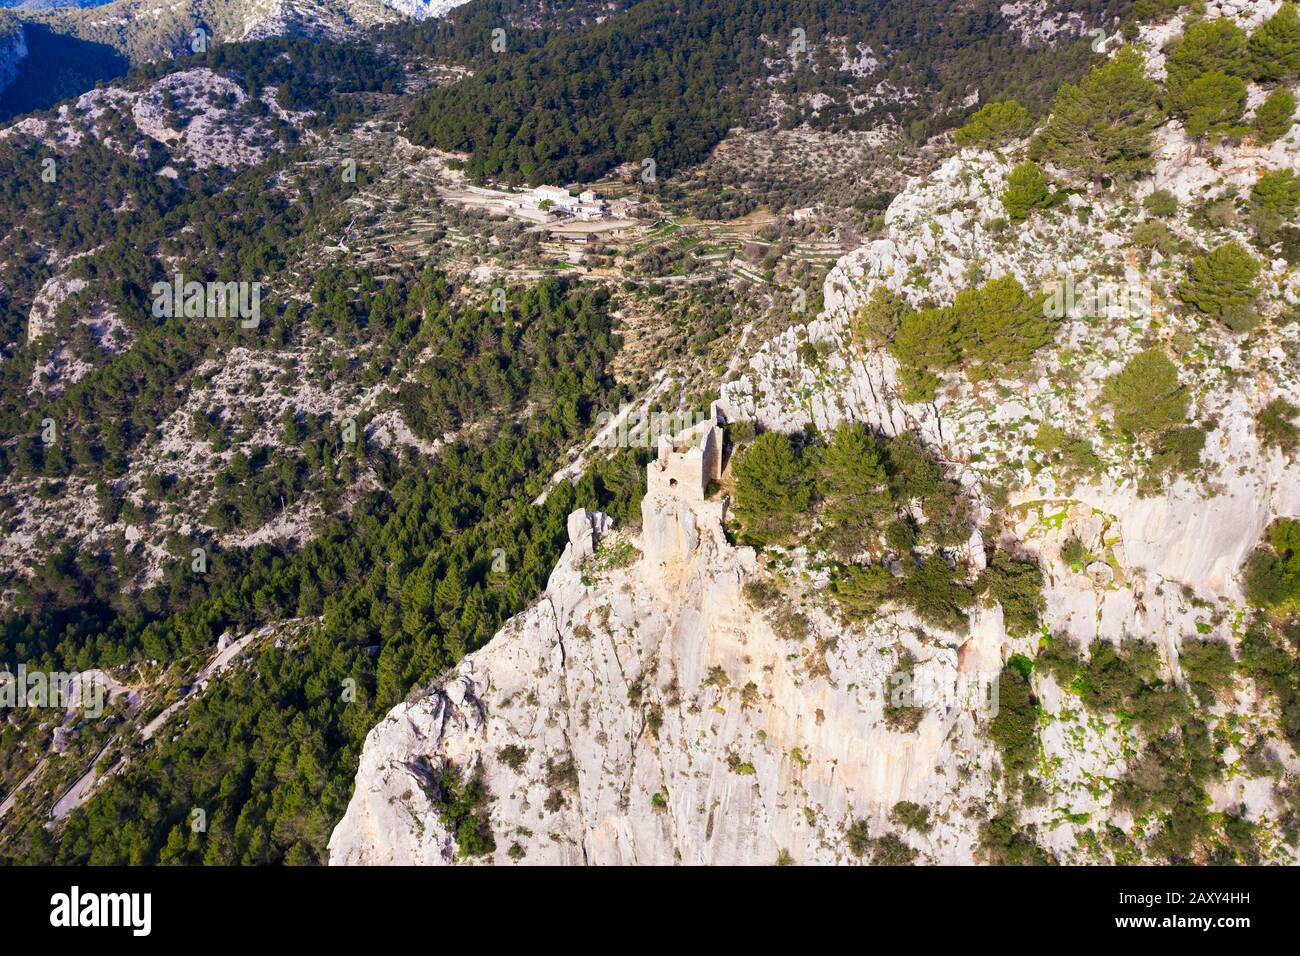 Rovine di Castell d'Alaro sul Puig d'Alaro, nella Finca es Verger, vicino Alaro, Serra de Tramuntana, vista aerea, Maiorca, Isole Baleari, Spagna Foto Stock